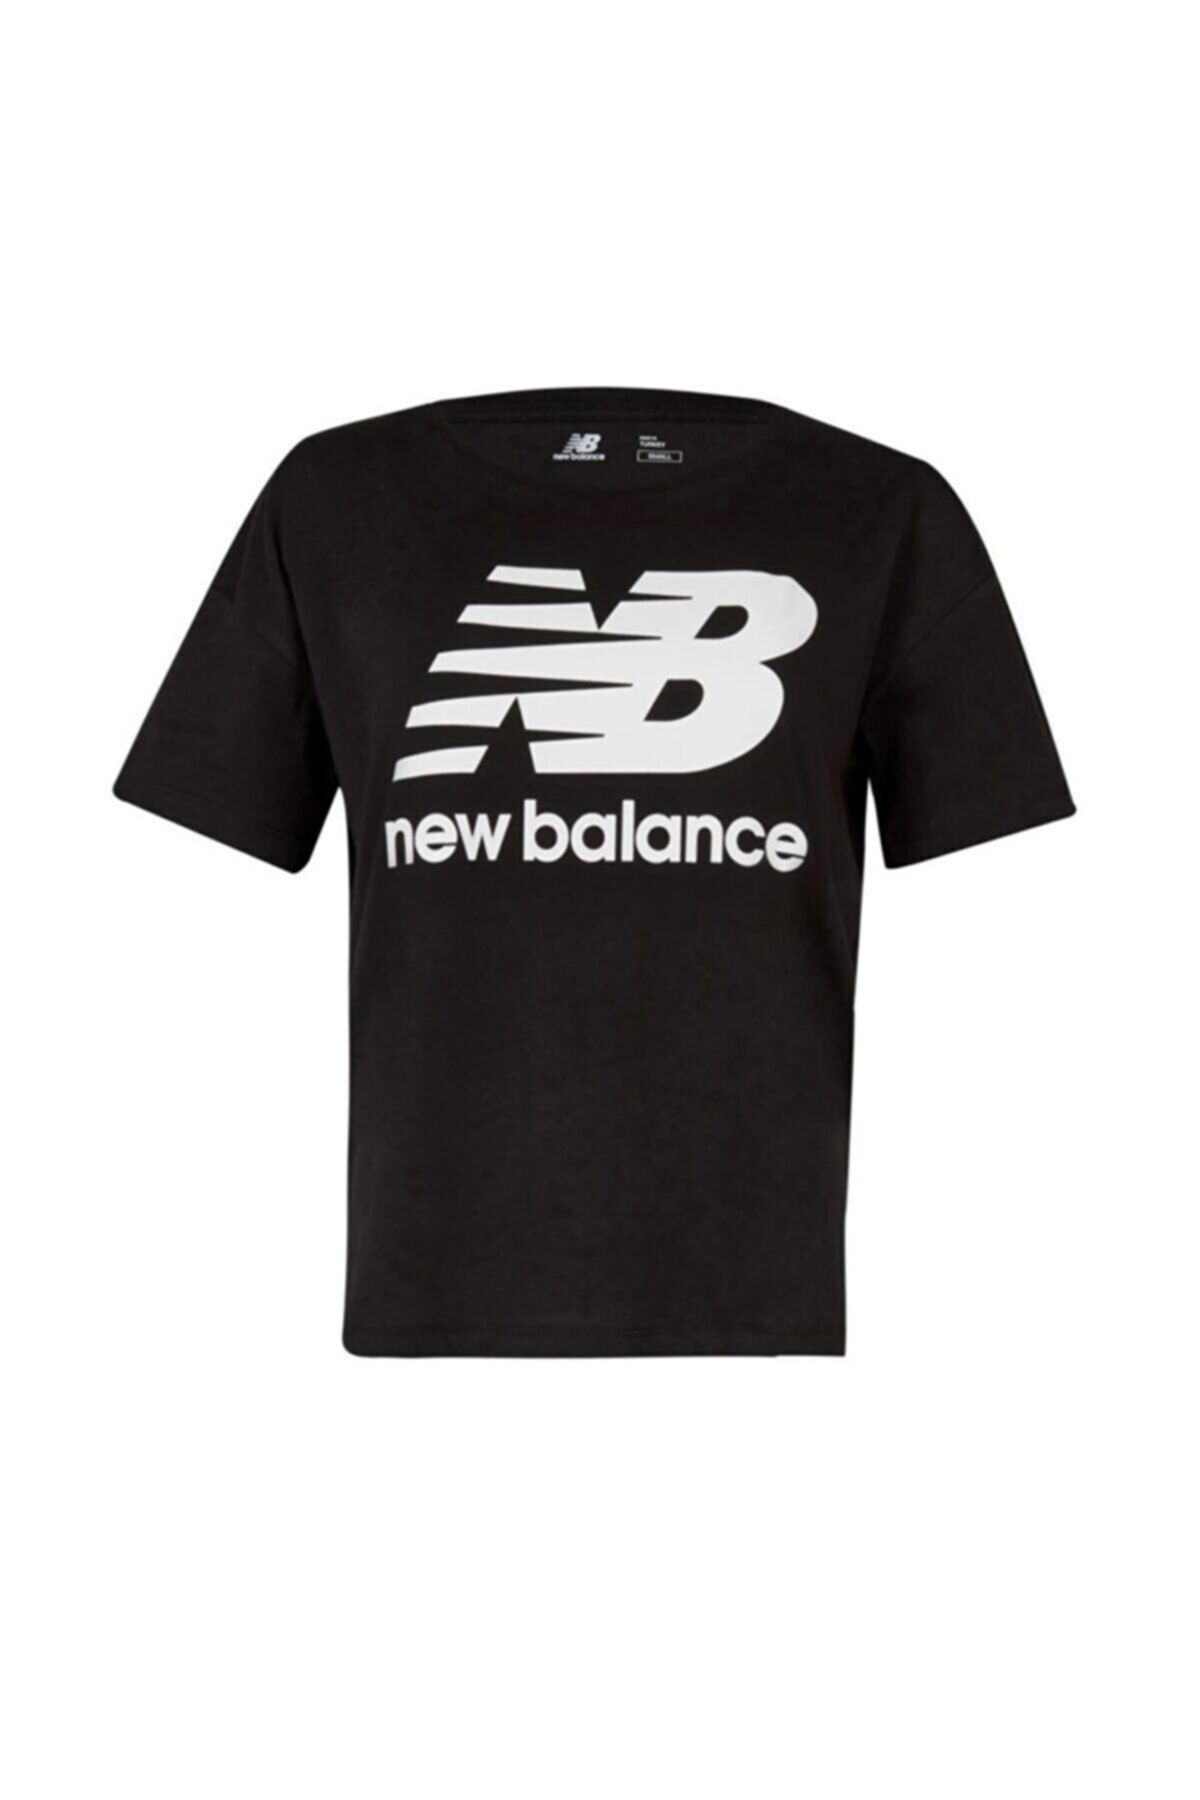 New Balance Womens Lifestyle Kadın T-shirt